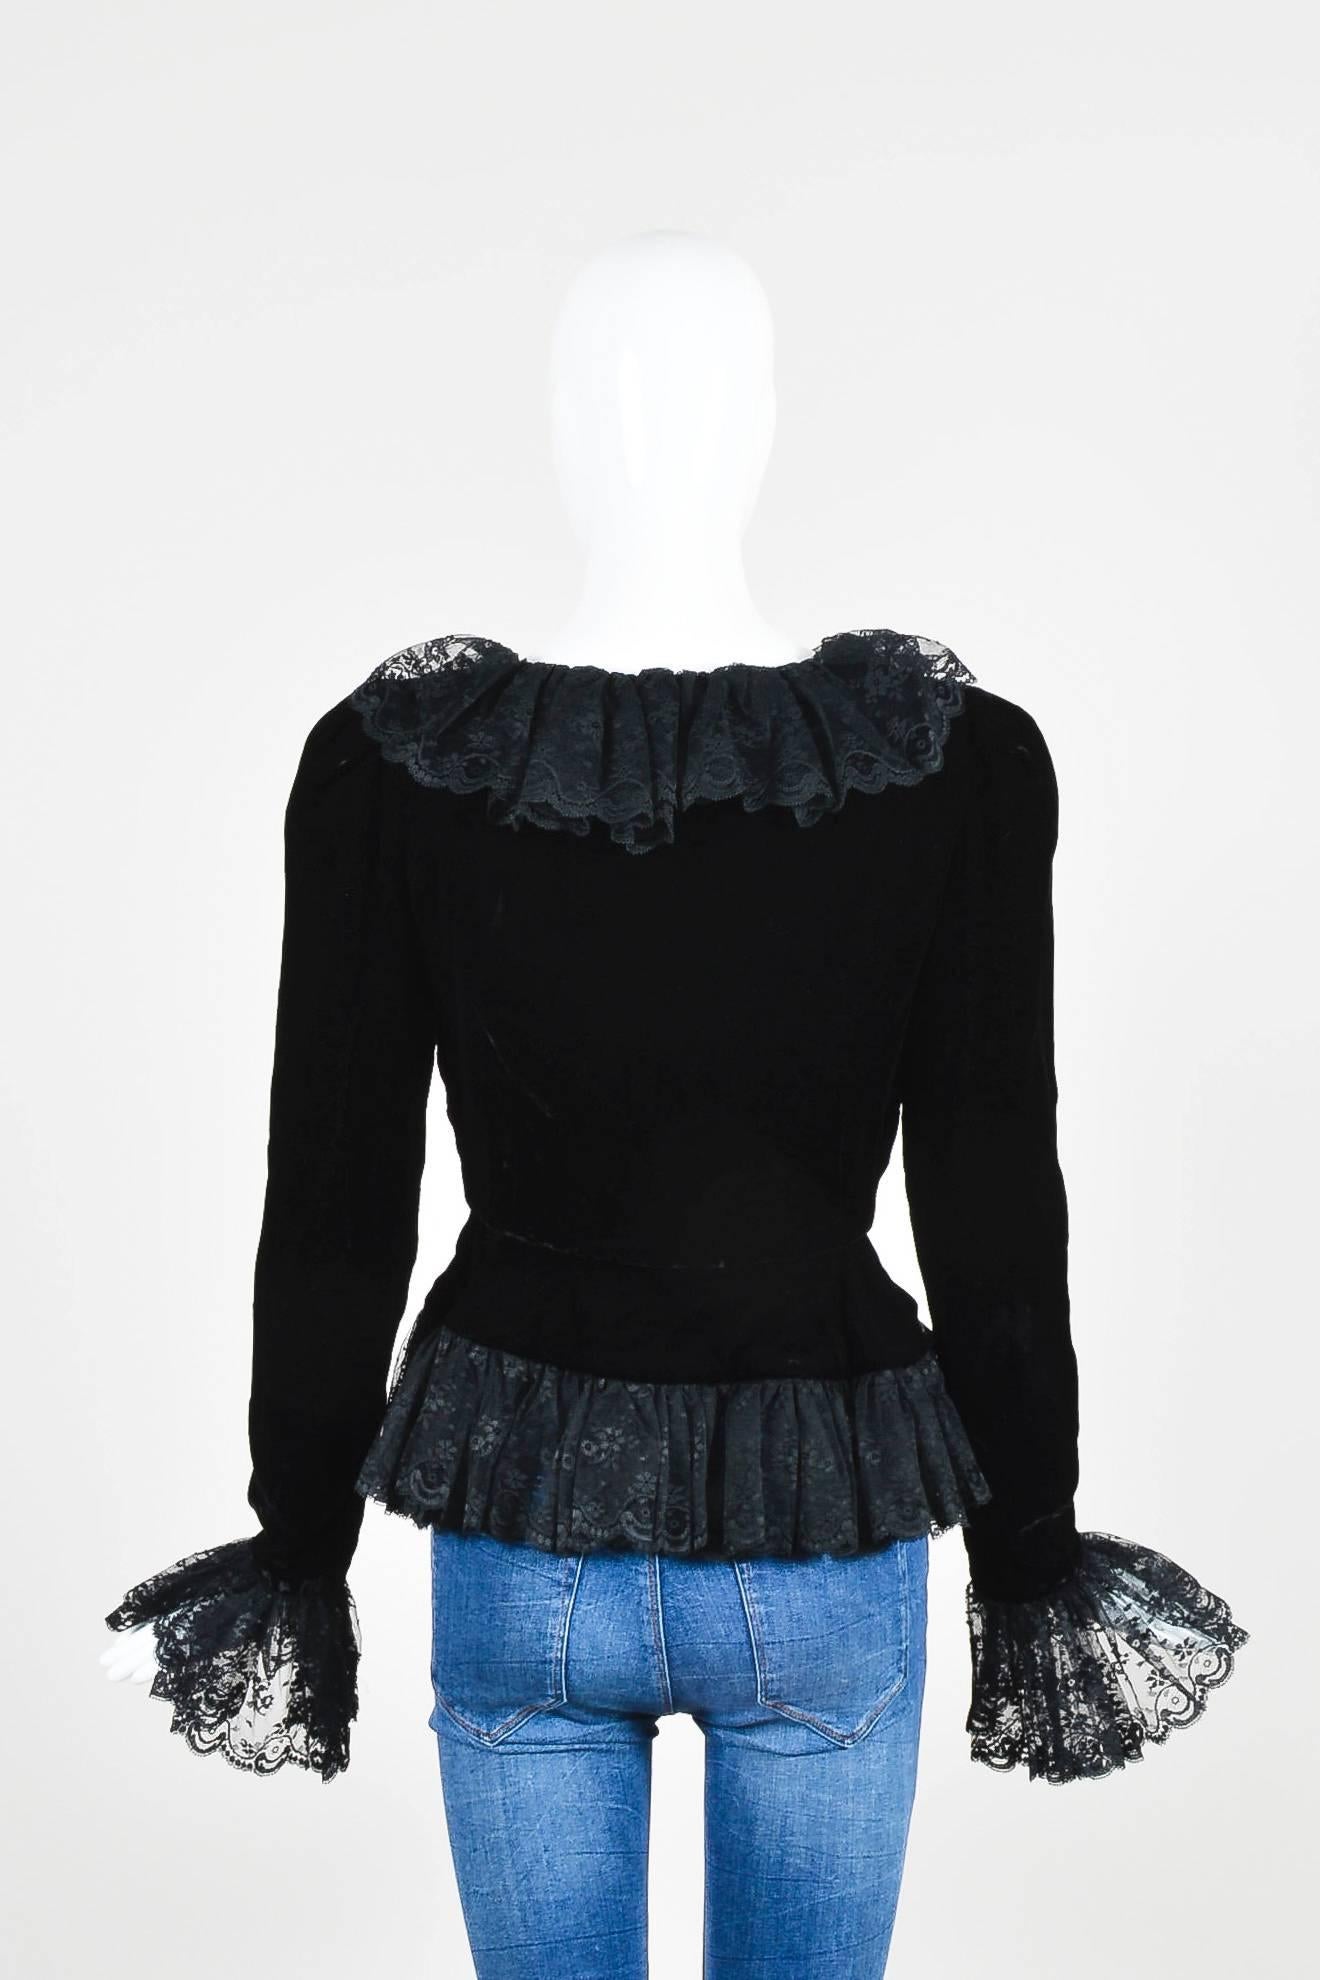 Vintage Oscar de la Renta Black Velvet & Ruffled Lace LS Blouse Jacket Size 6 In Good Condition For Sale In Chicago, IL